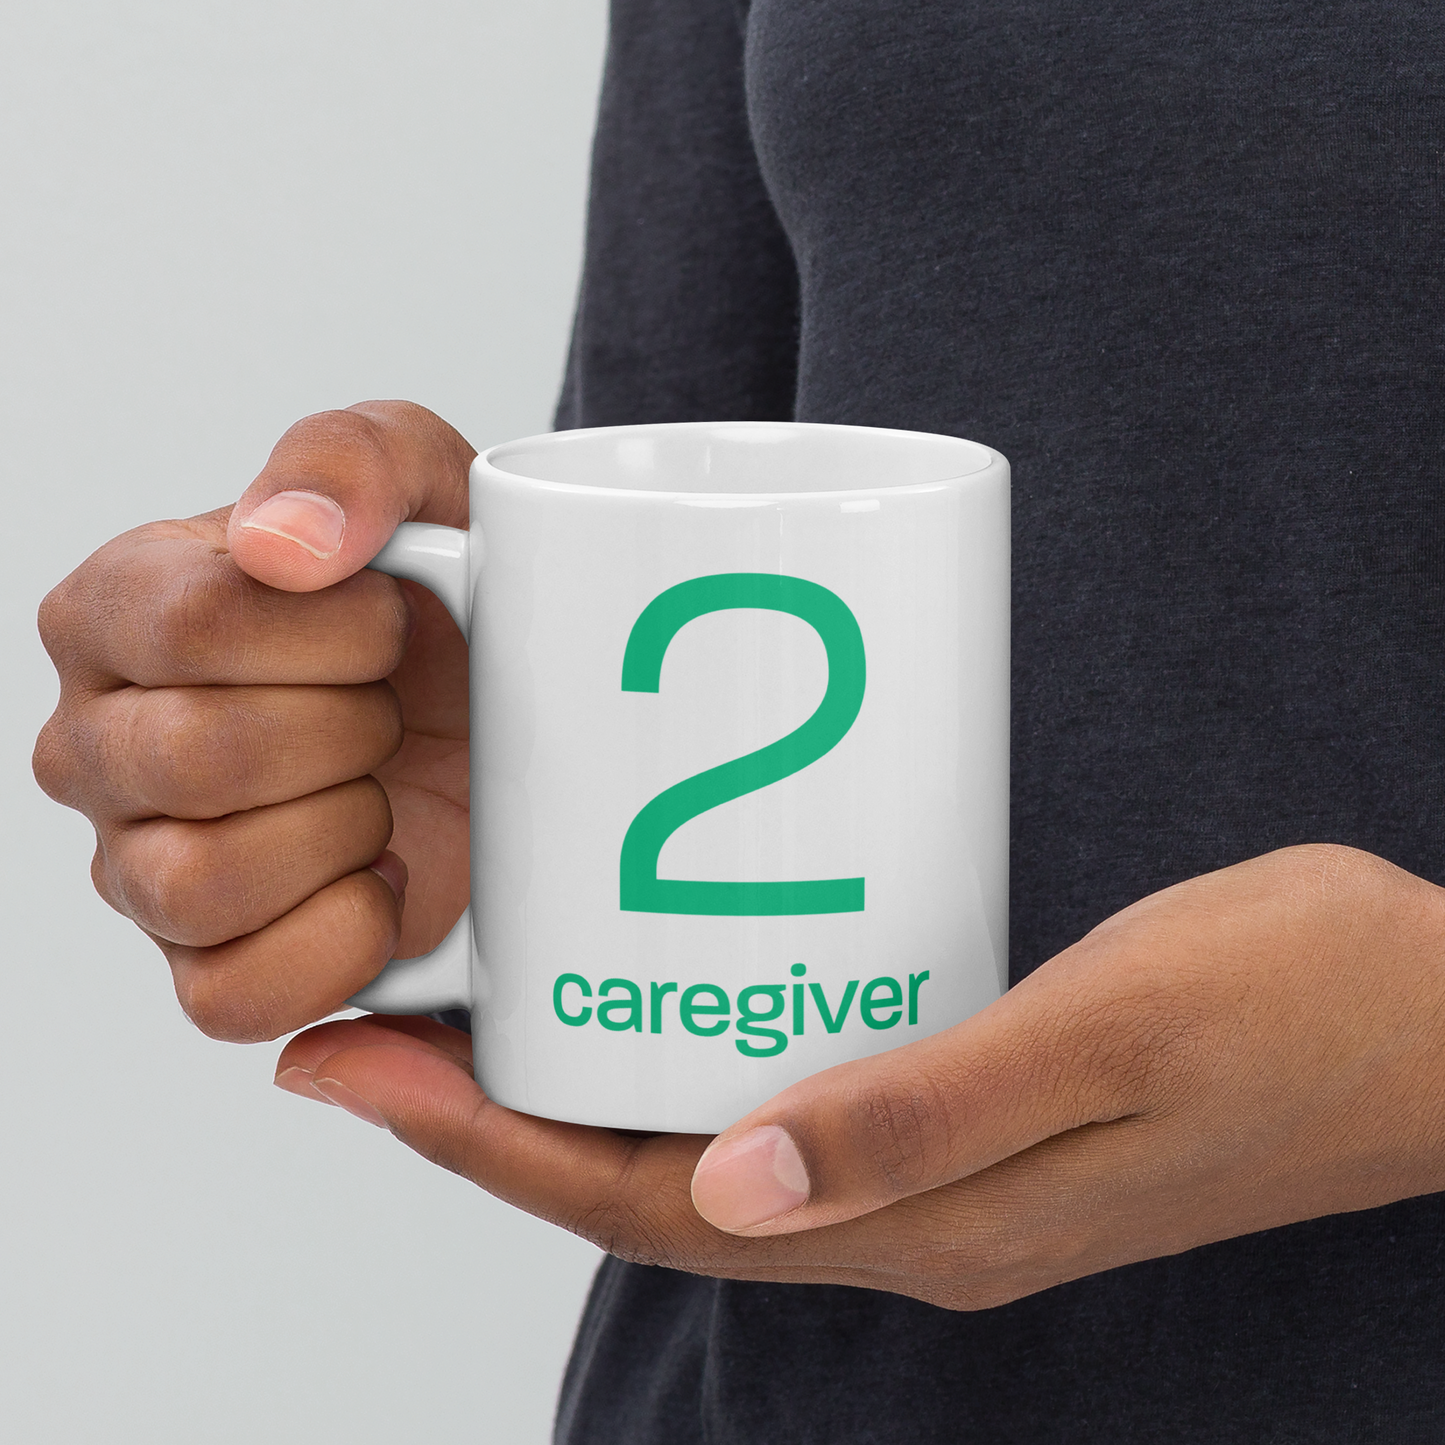 Enneagram Mug - Type 2 - The Caregiver